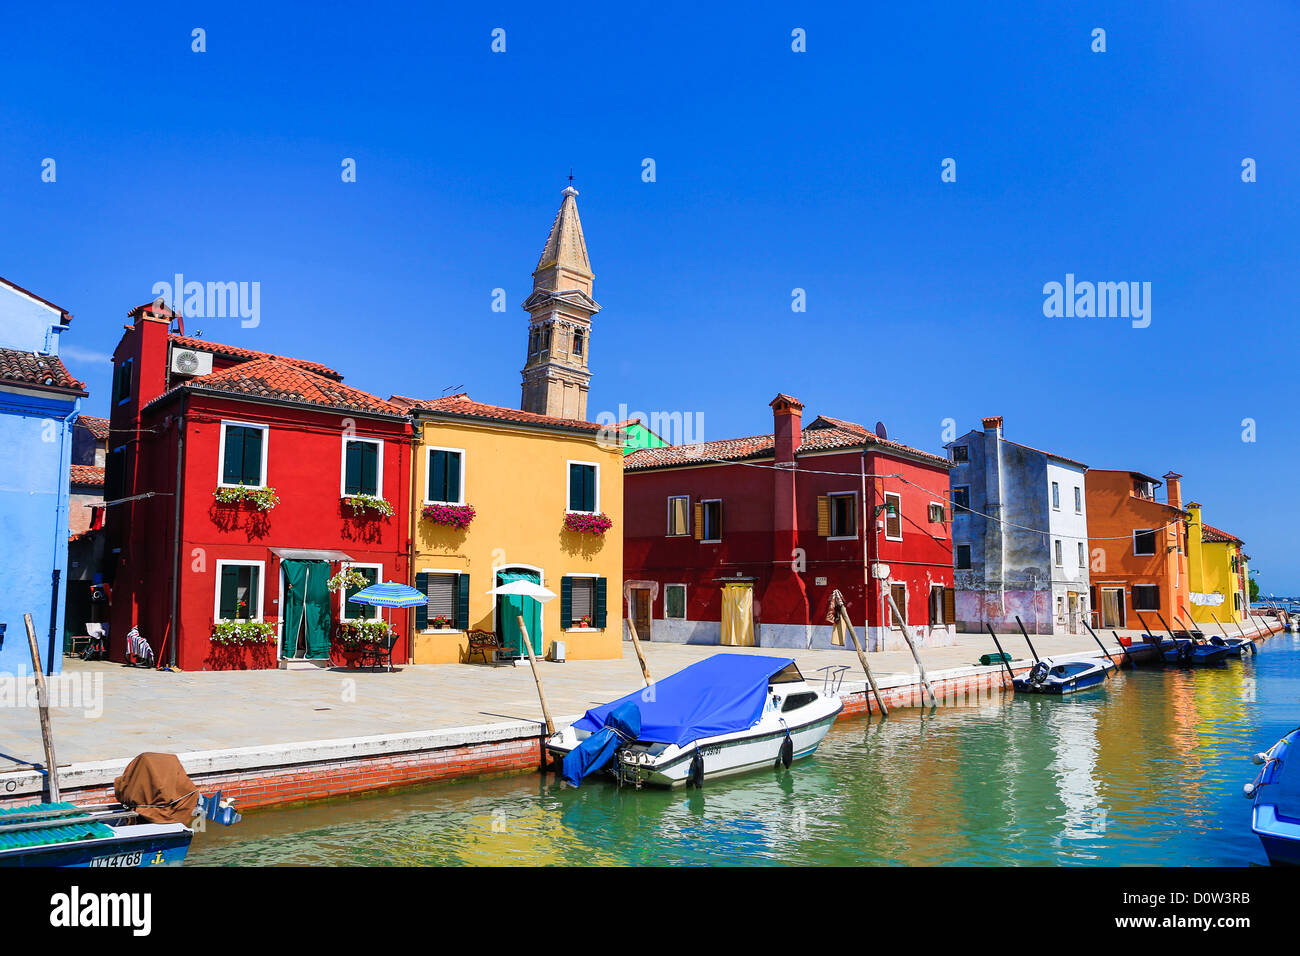 Italien, Europa, Reisen, Architektur, Boote, Burano, Kanal, bunt, Farben, Tourismus, Venedig, Turm Stockfoto